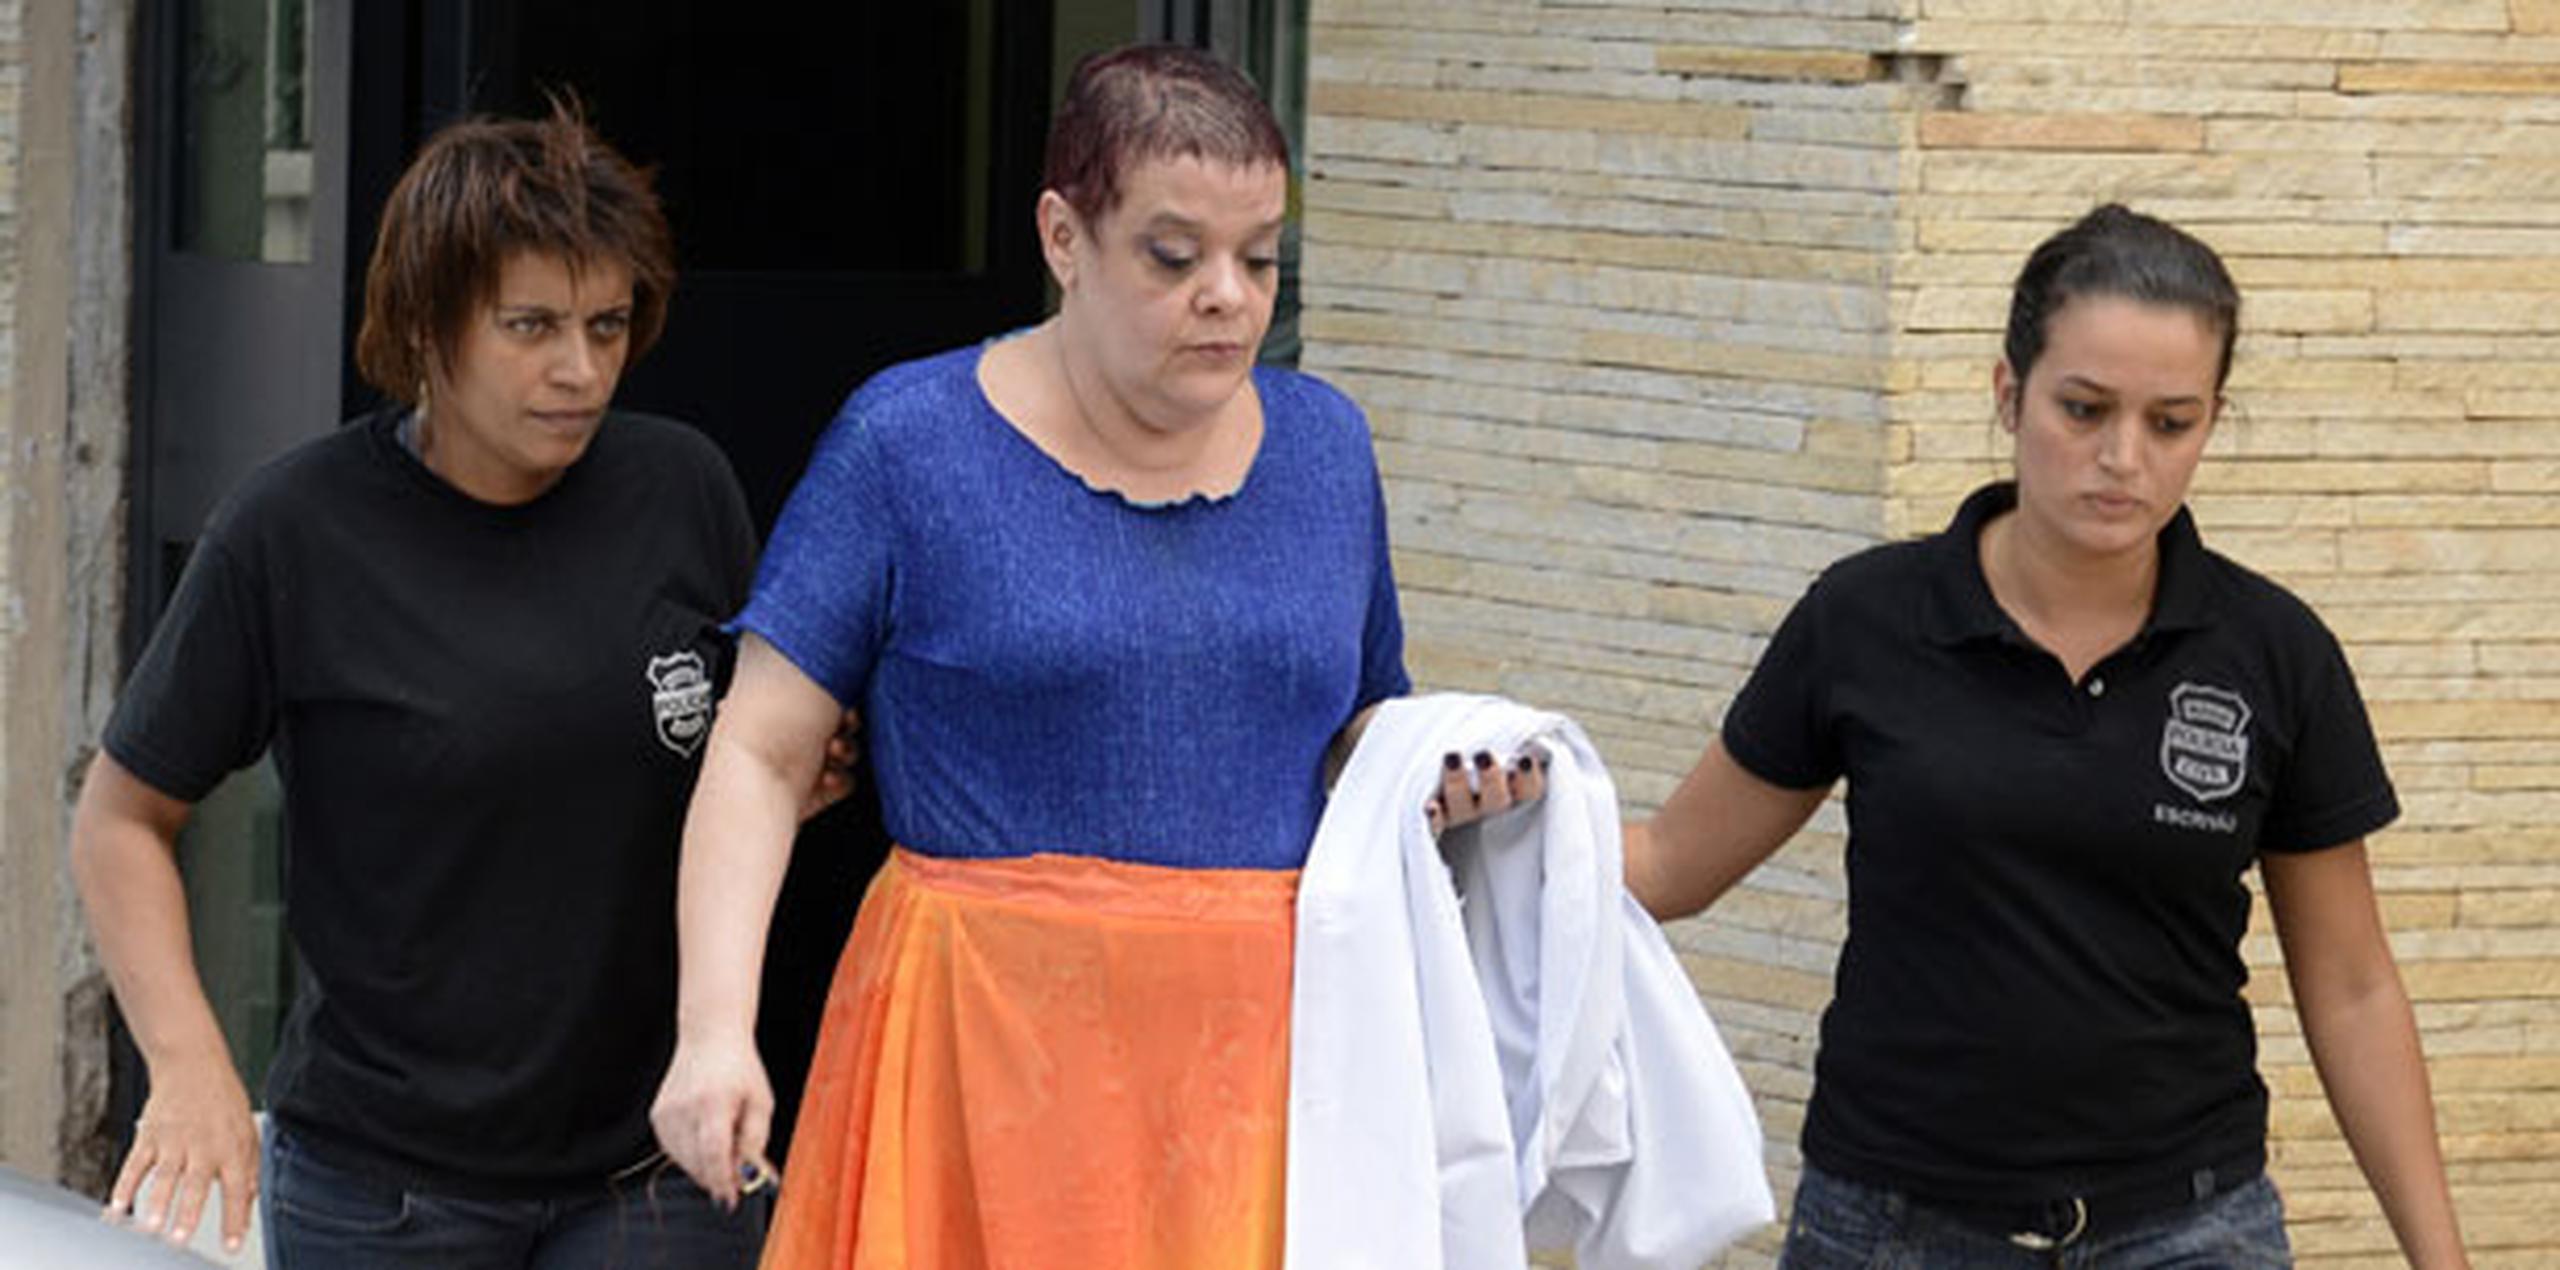 Virginia Helena de Souza está acusada de asesinar a siete de sus pacientes en Brasil. (AP)